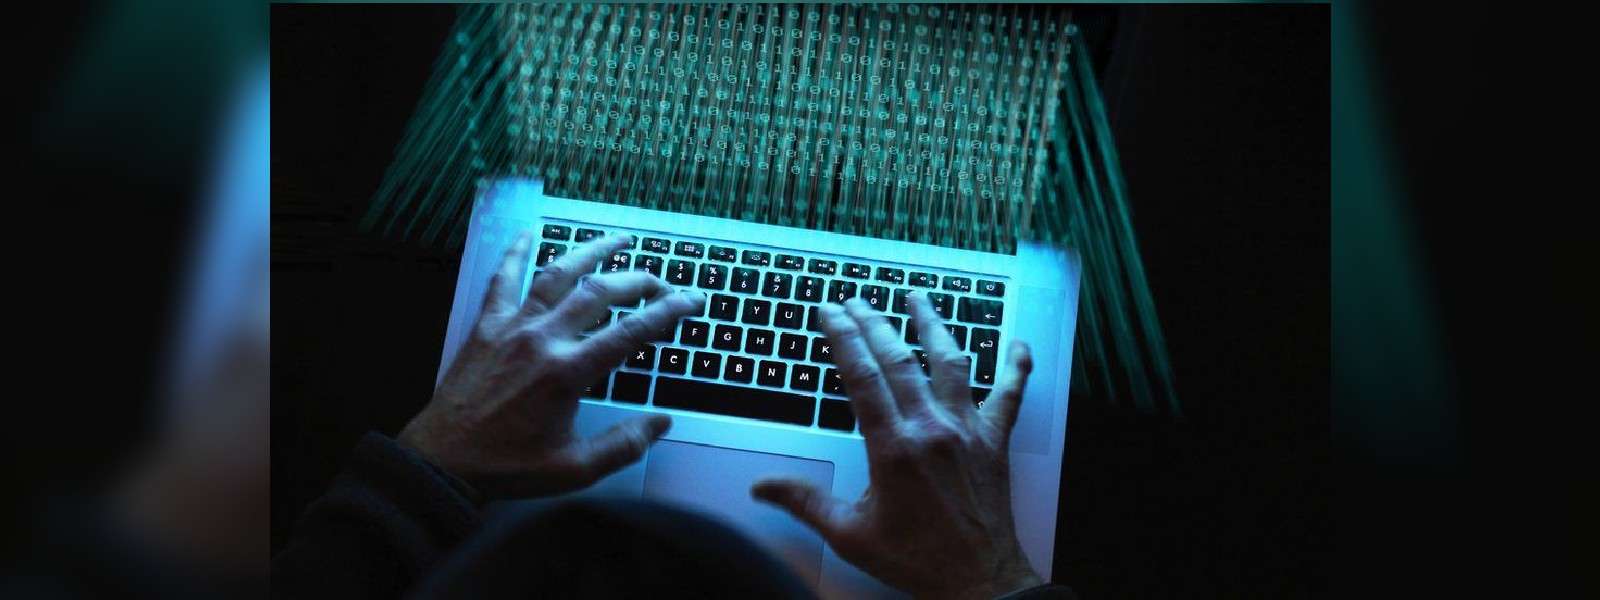 Majority of Govt. websites targeted in LK. domain hack